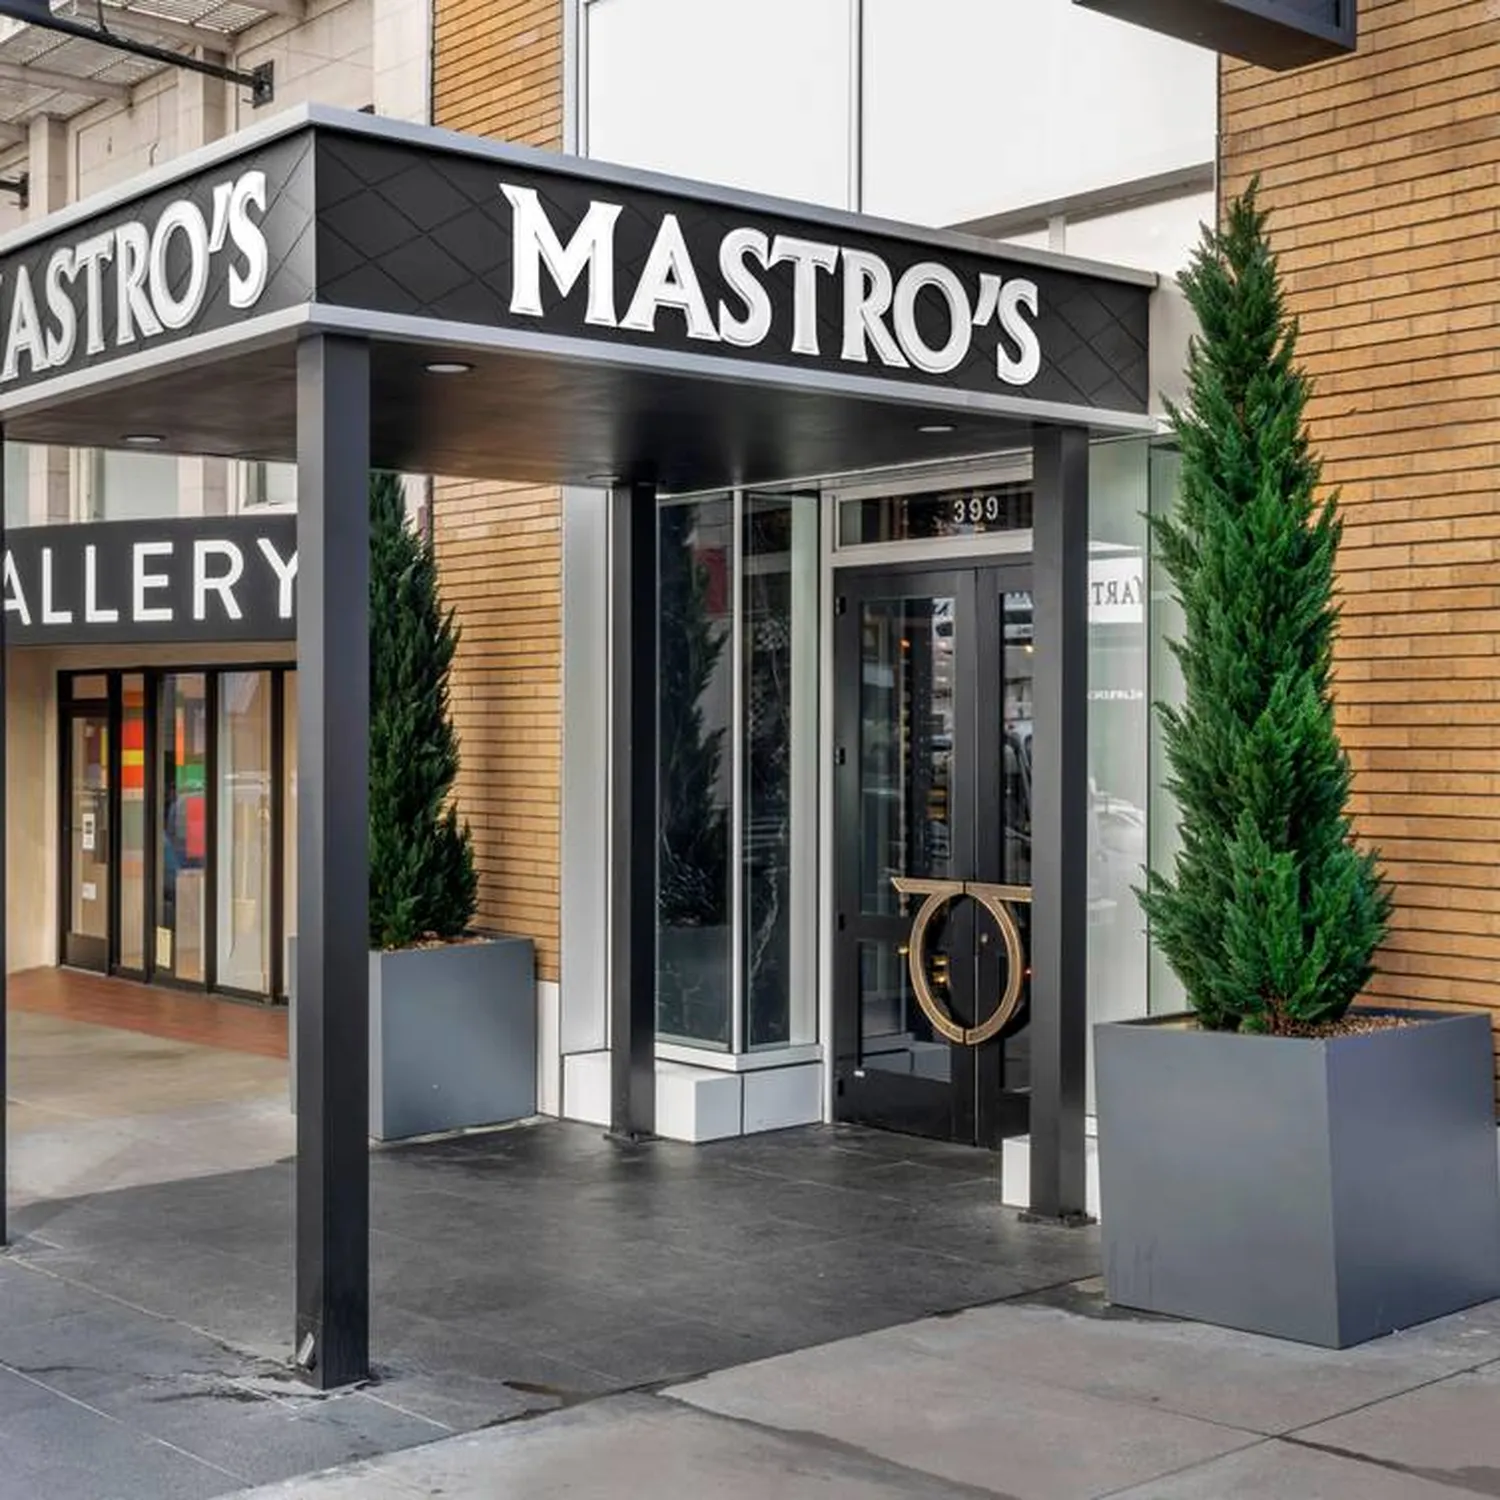 Mastro's Restaurant San Francisco